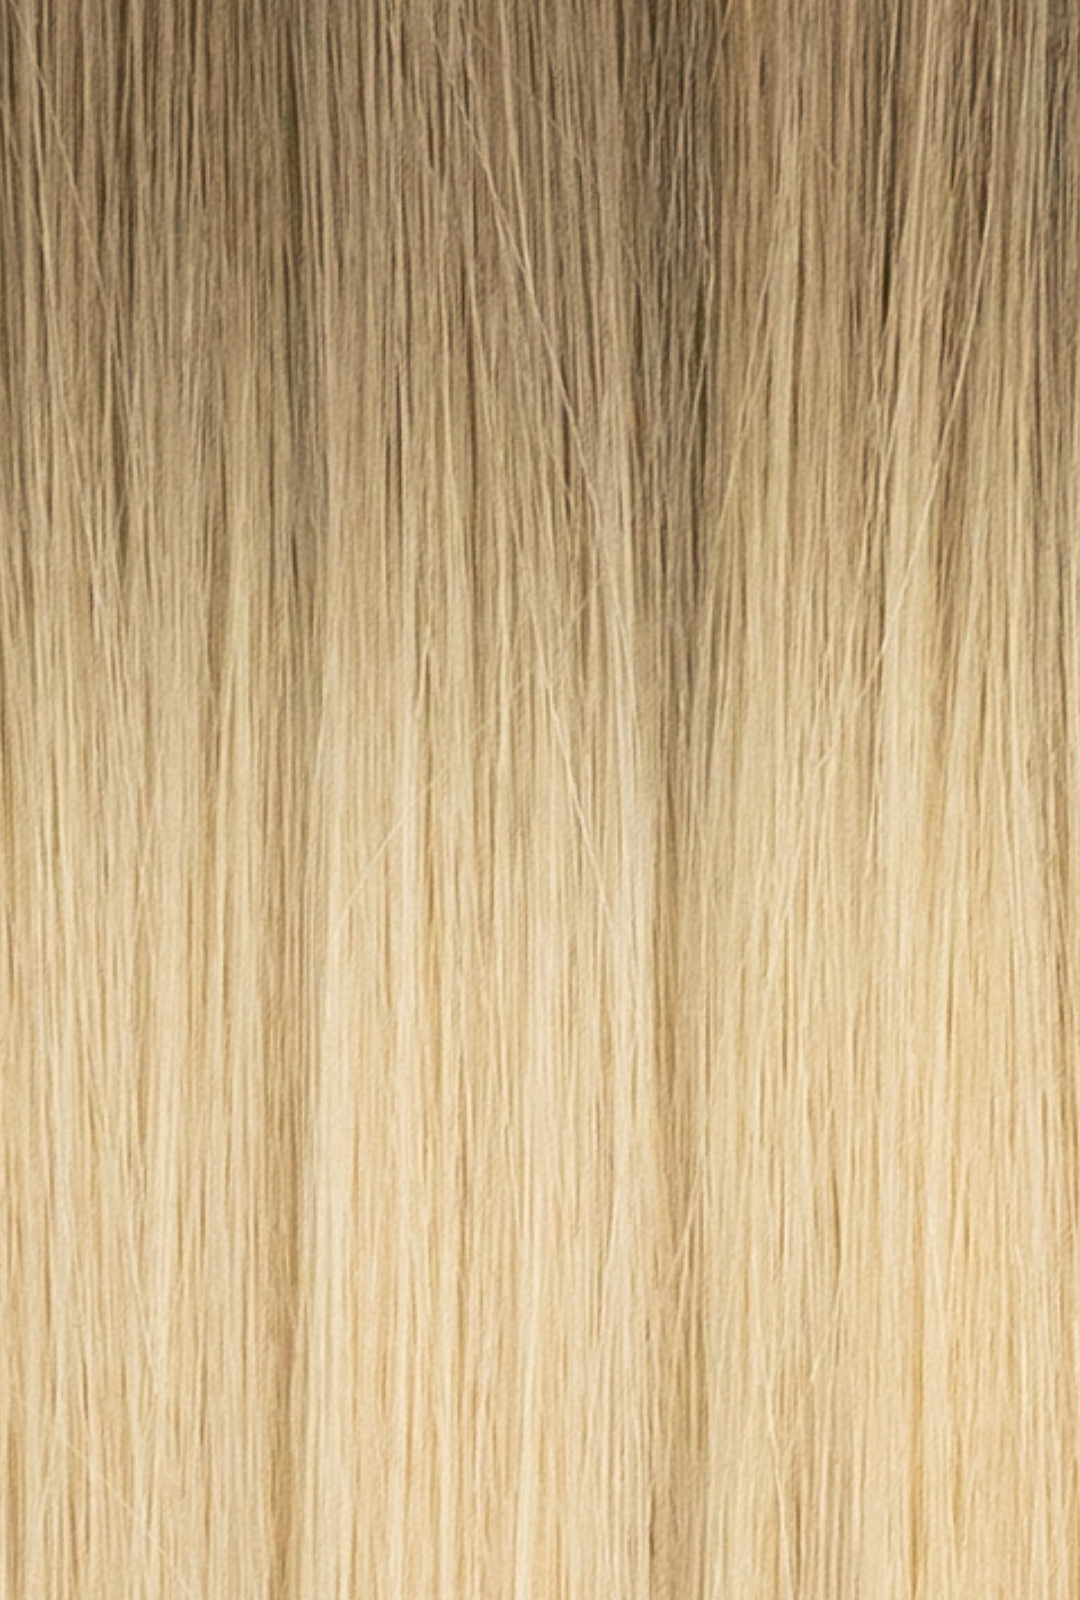 Laced Hair Keratin Bond Extensions Ombré #8/613